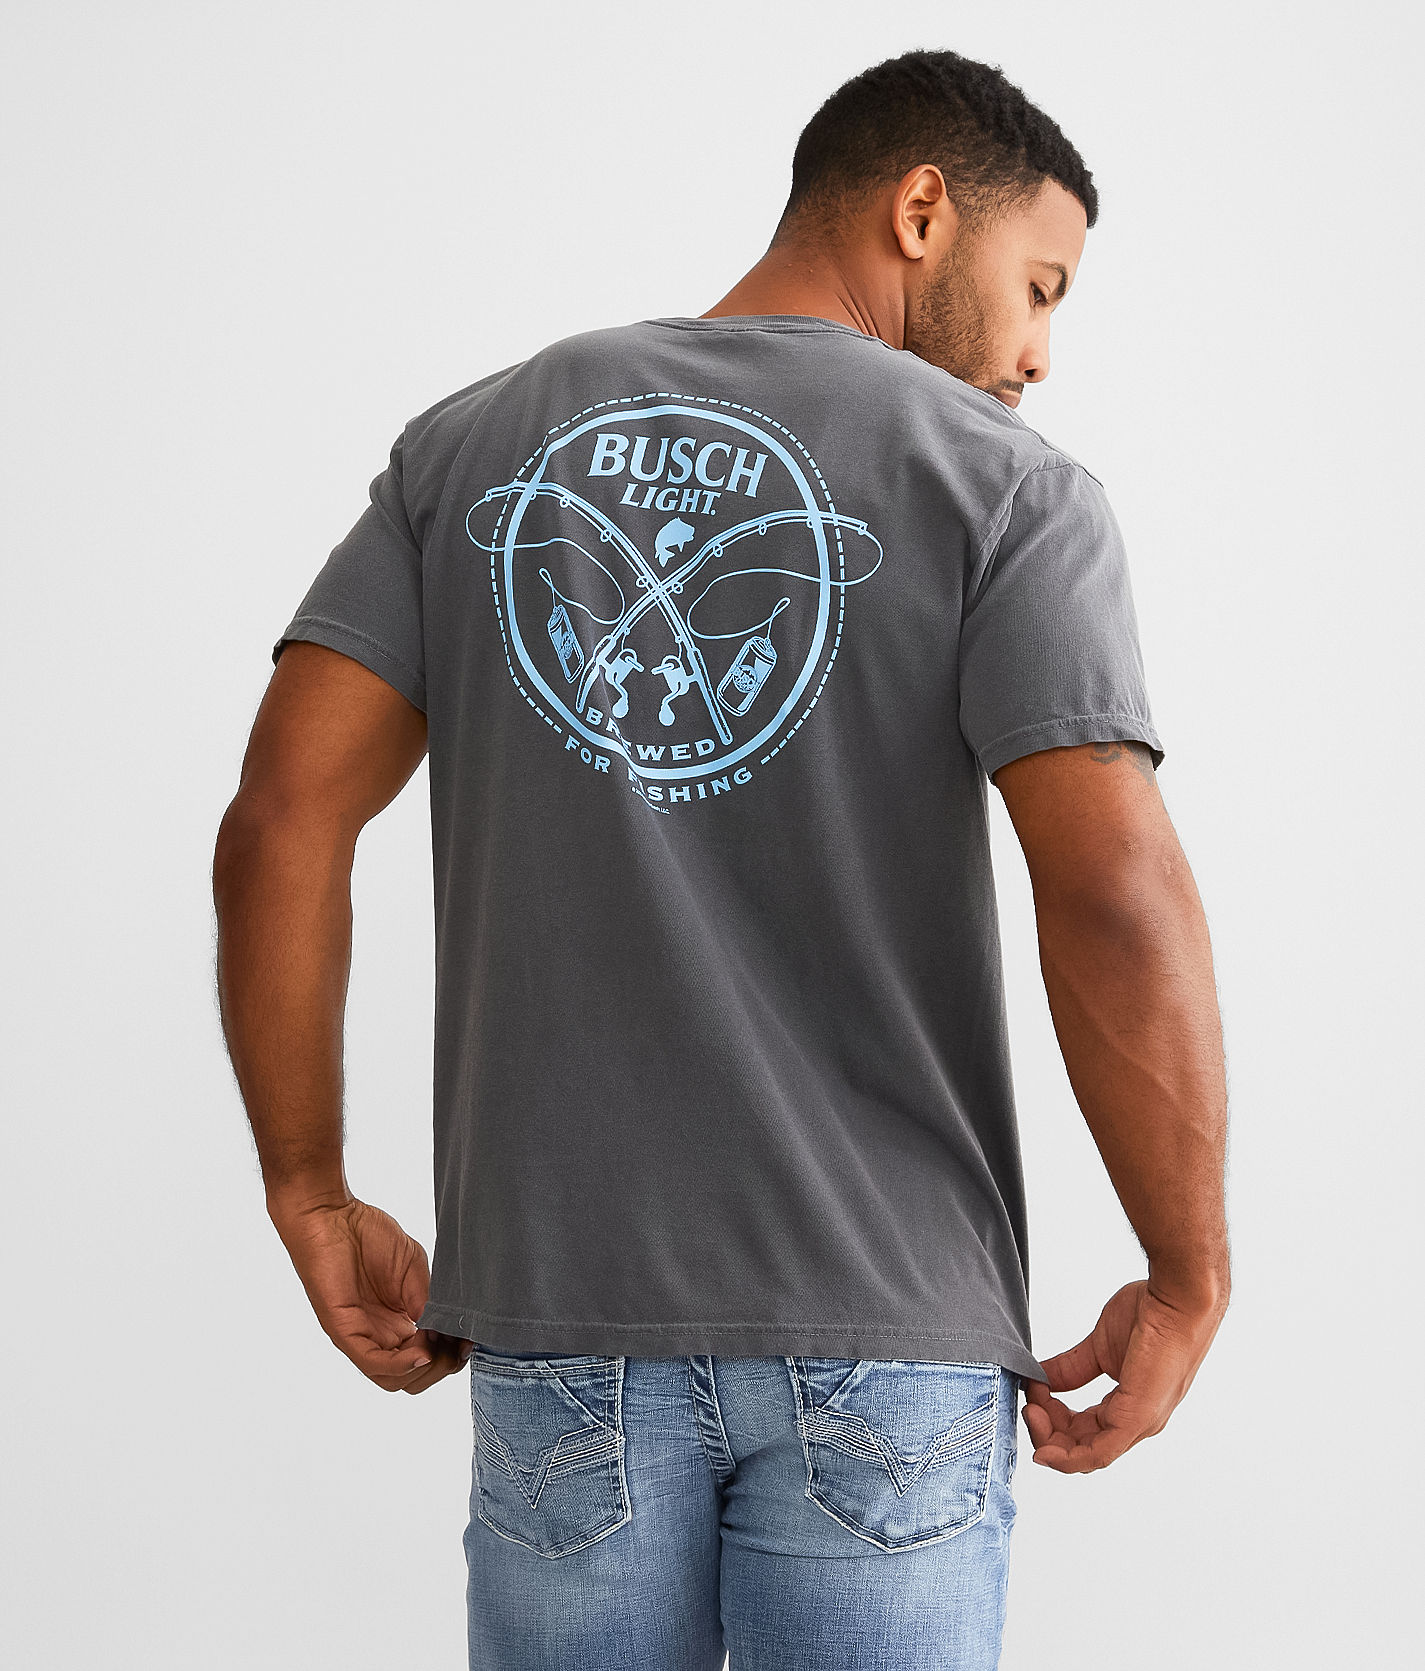 Brew City Busch Light Fishing T-Shirt - Grey Large, Men's